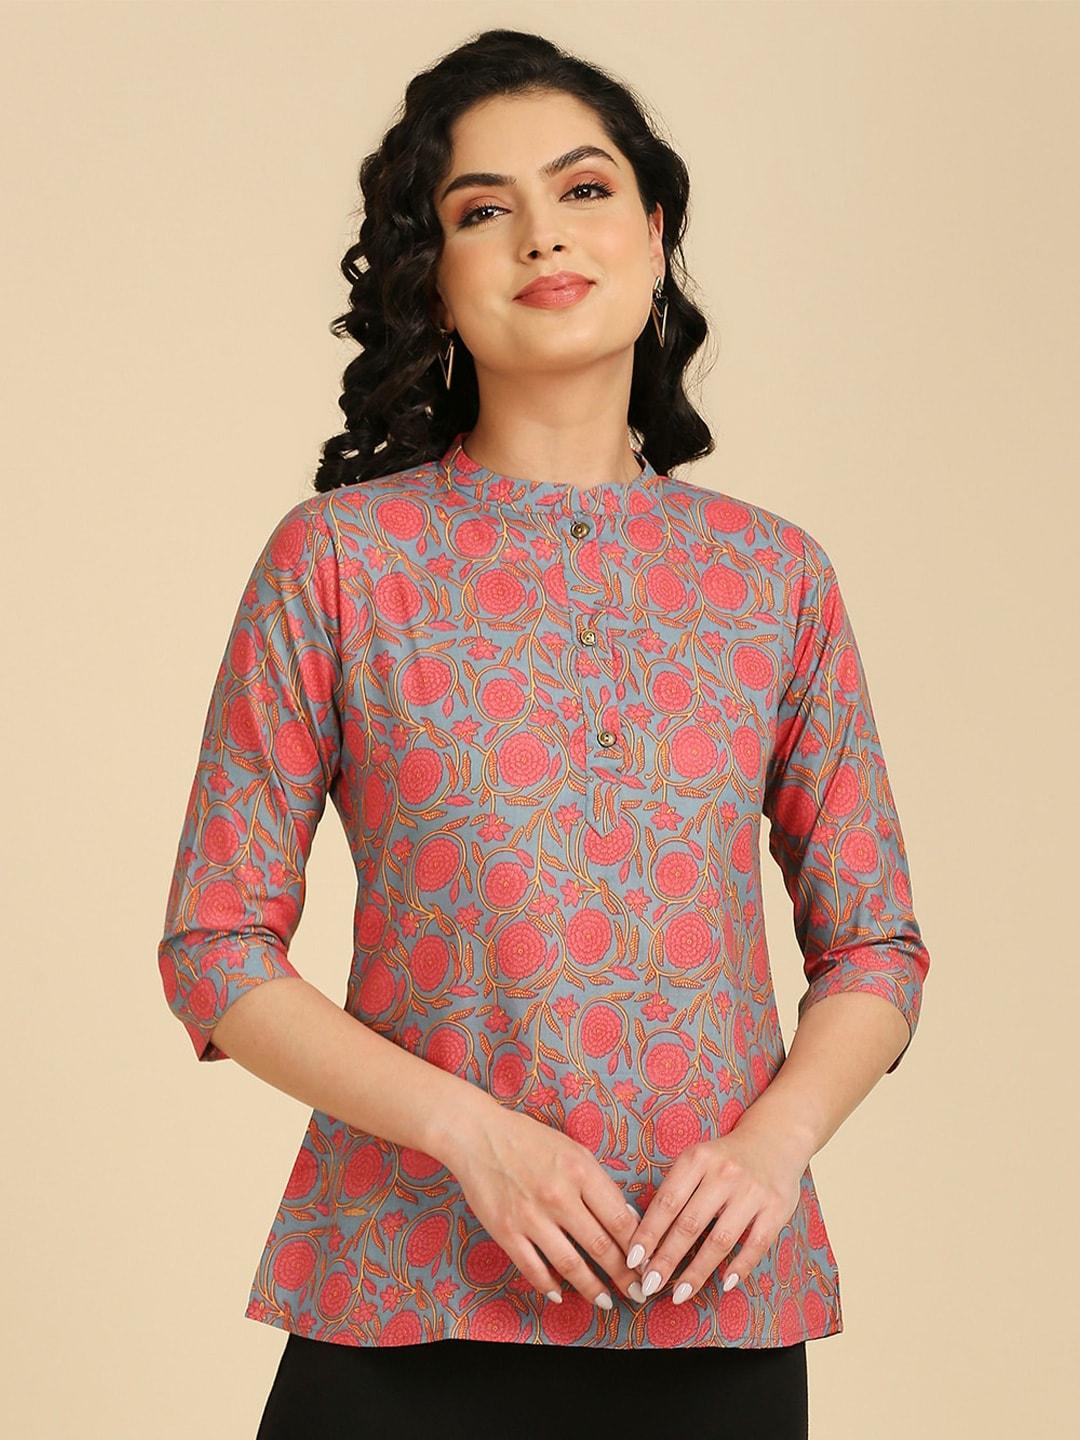 gufrina floral printed mandarin collar cotton shirt style top